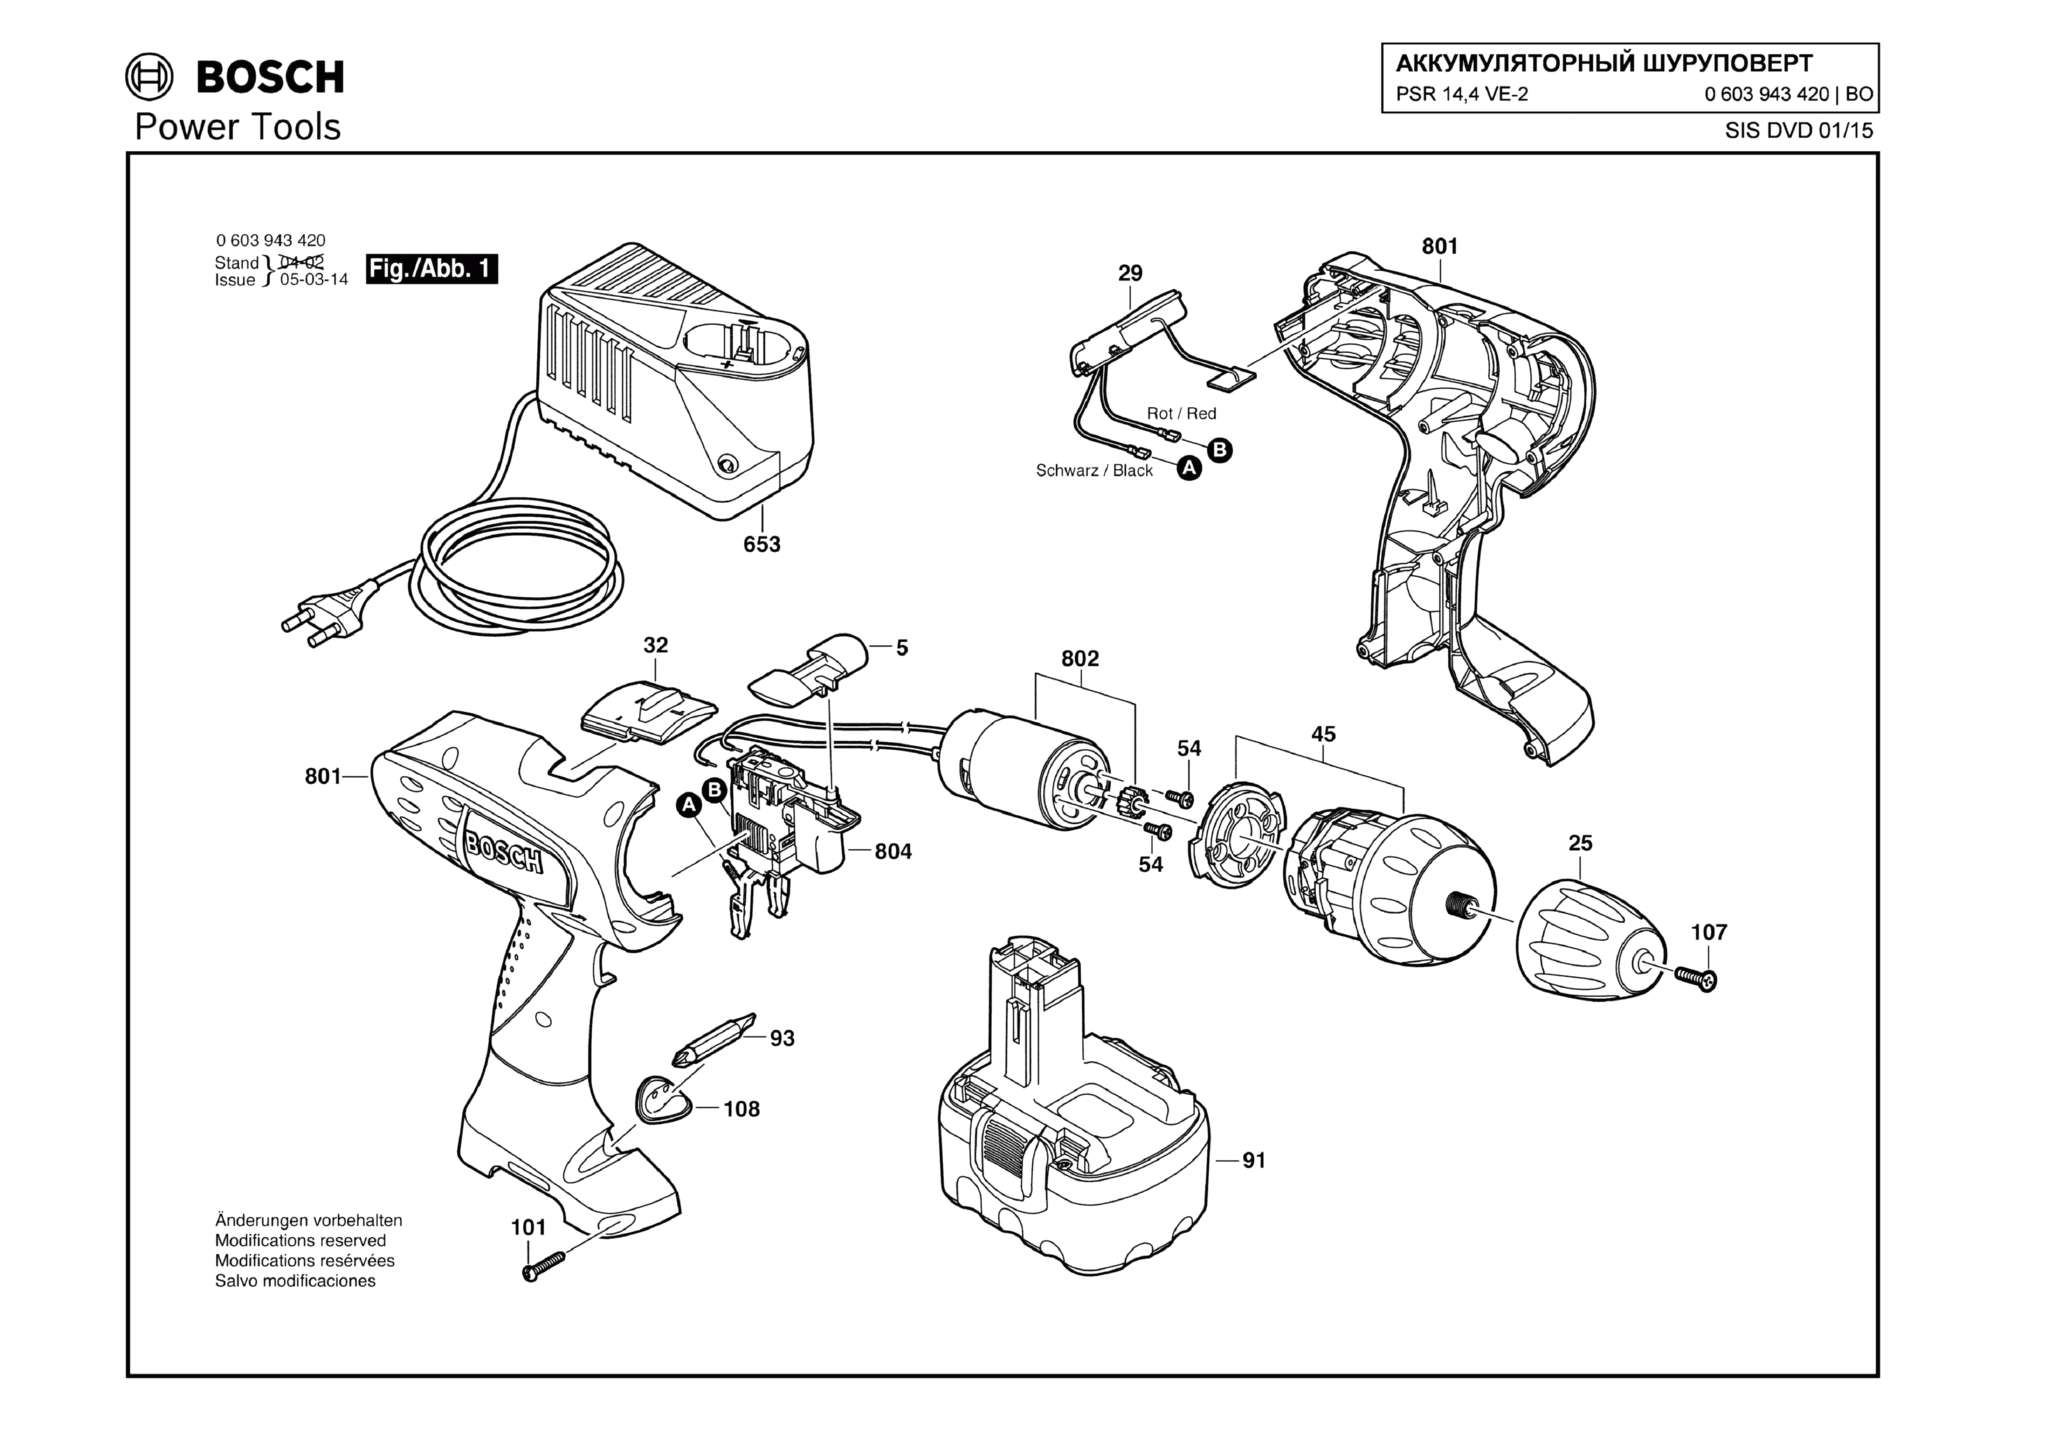 Запчасти, схема и деталировка Bosch PSR 14,4 VE-2 (ТИП 0603943420)